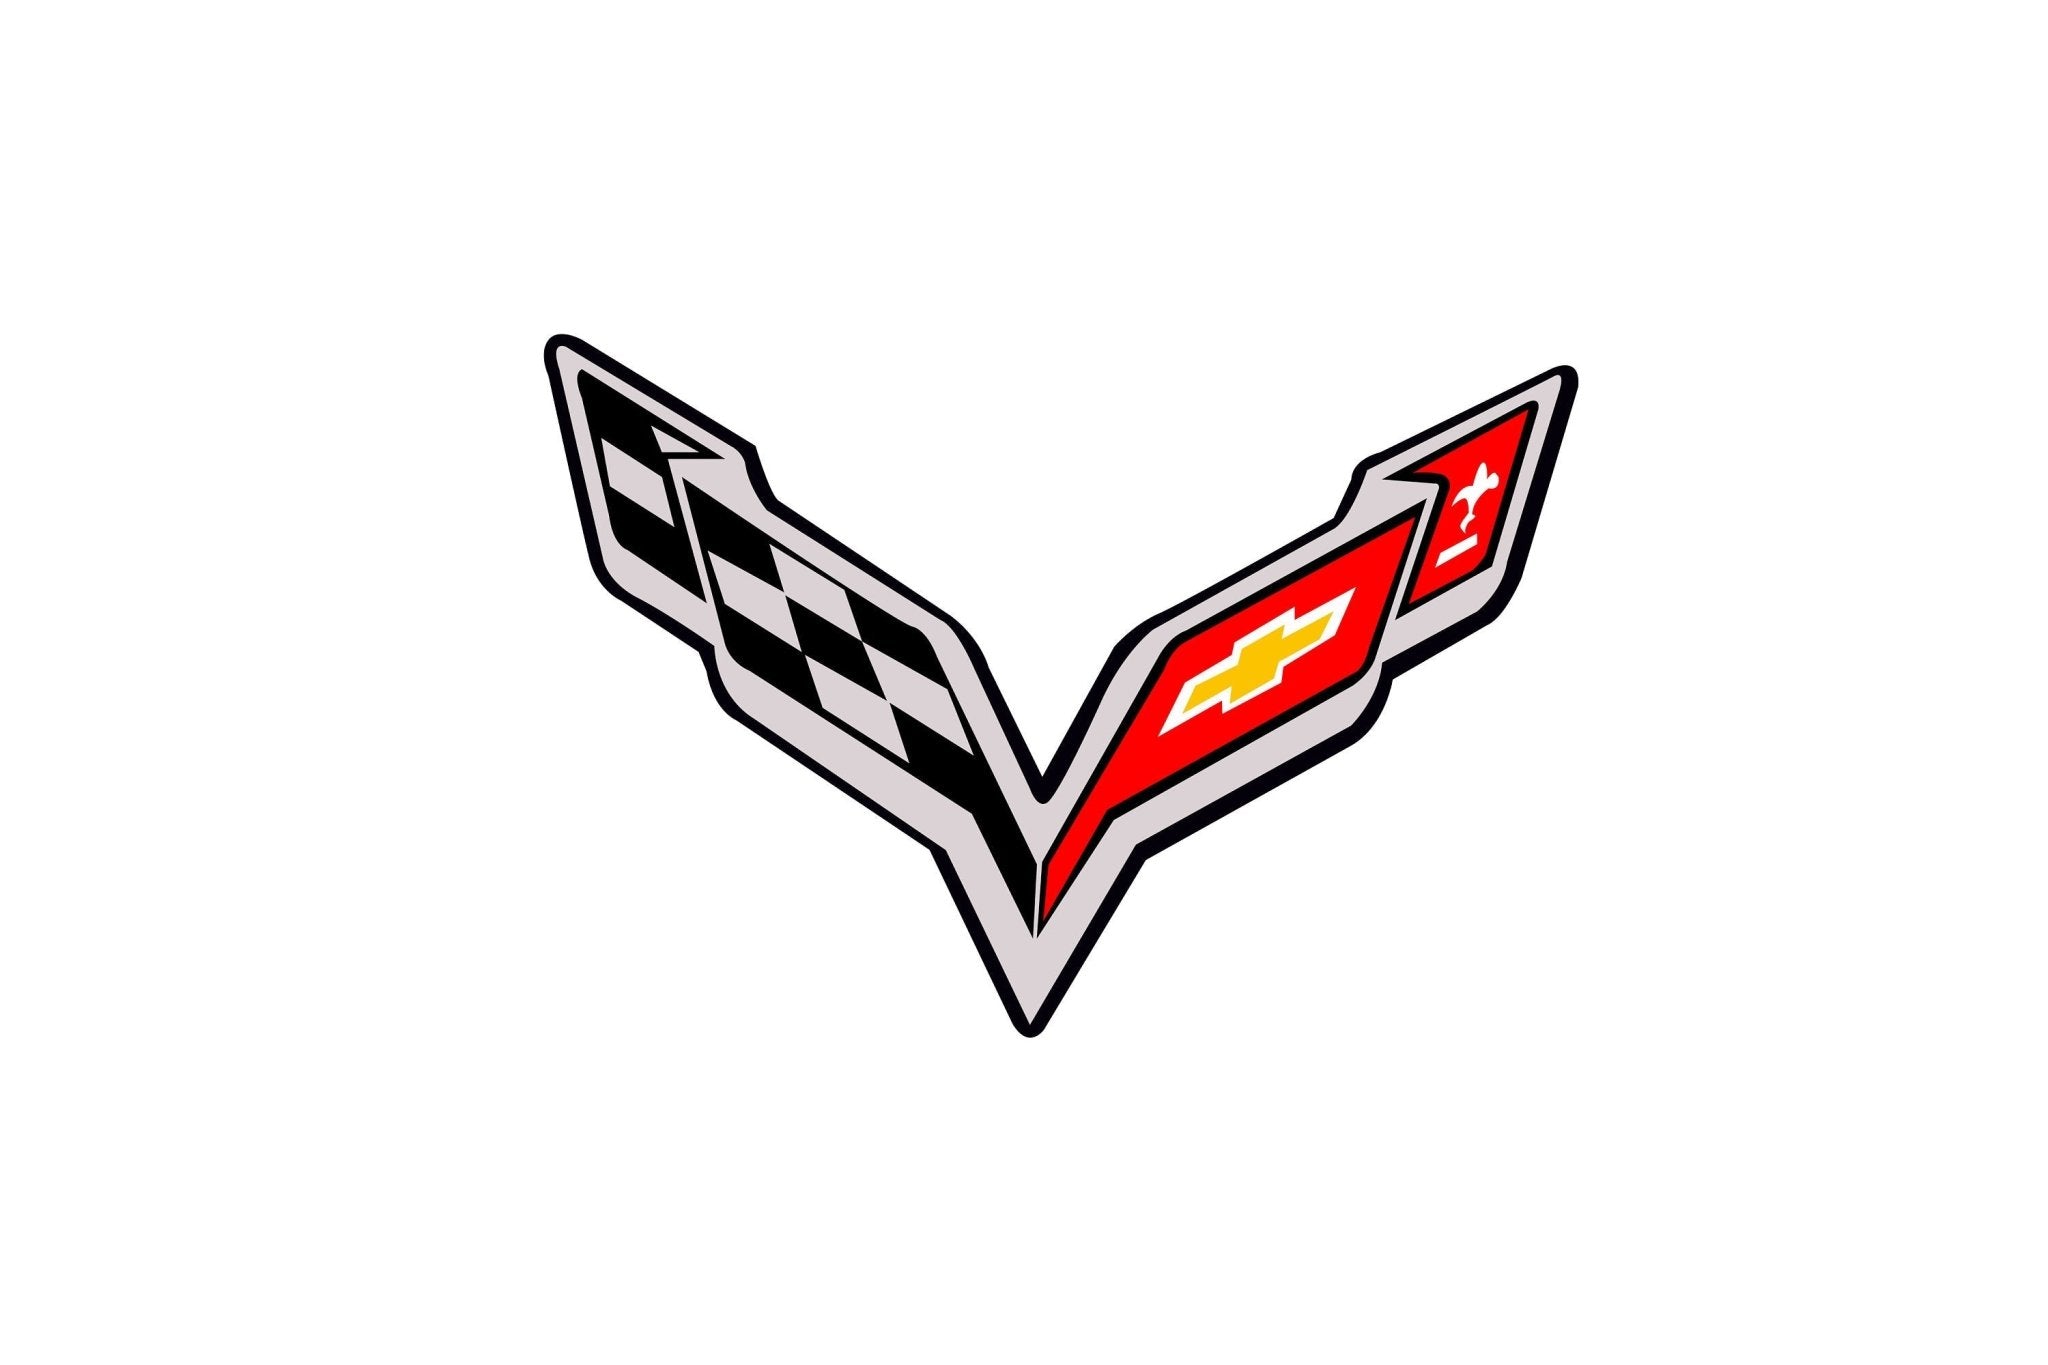 Corvette C7 Logo Instant Download, Vector, Car, Emblem, SVG, Cut File, Print, Digital, Scrapbooking, Cameo, Cricut - Vette1 - C7 Downloads